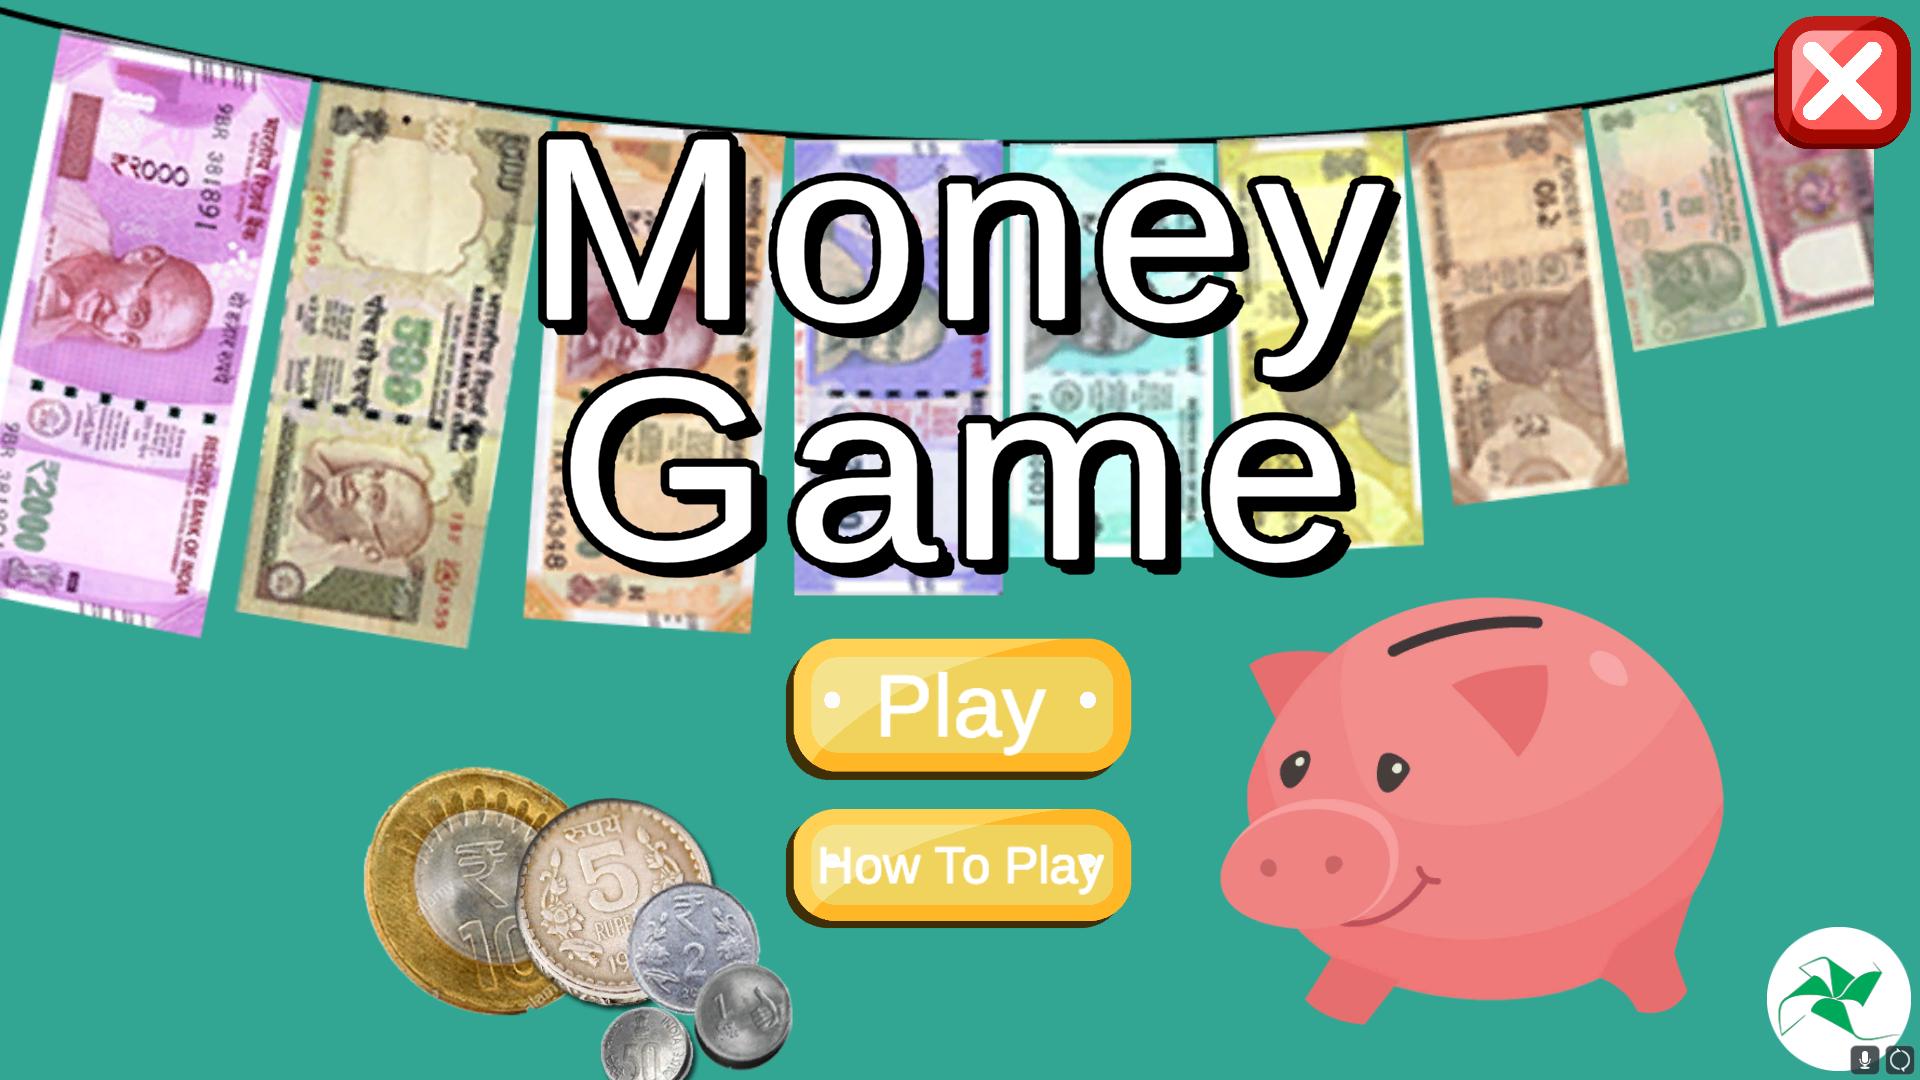 Game money. Money game 2. Get money game. No more money game.